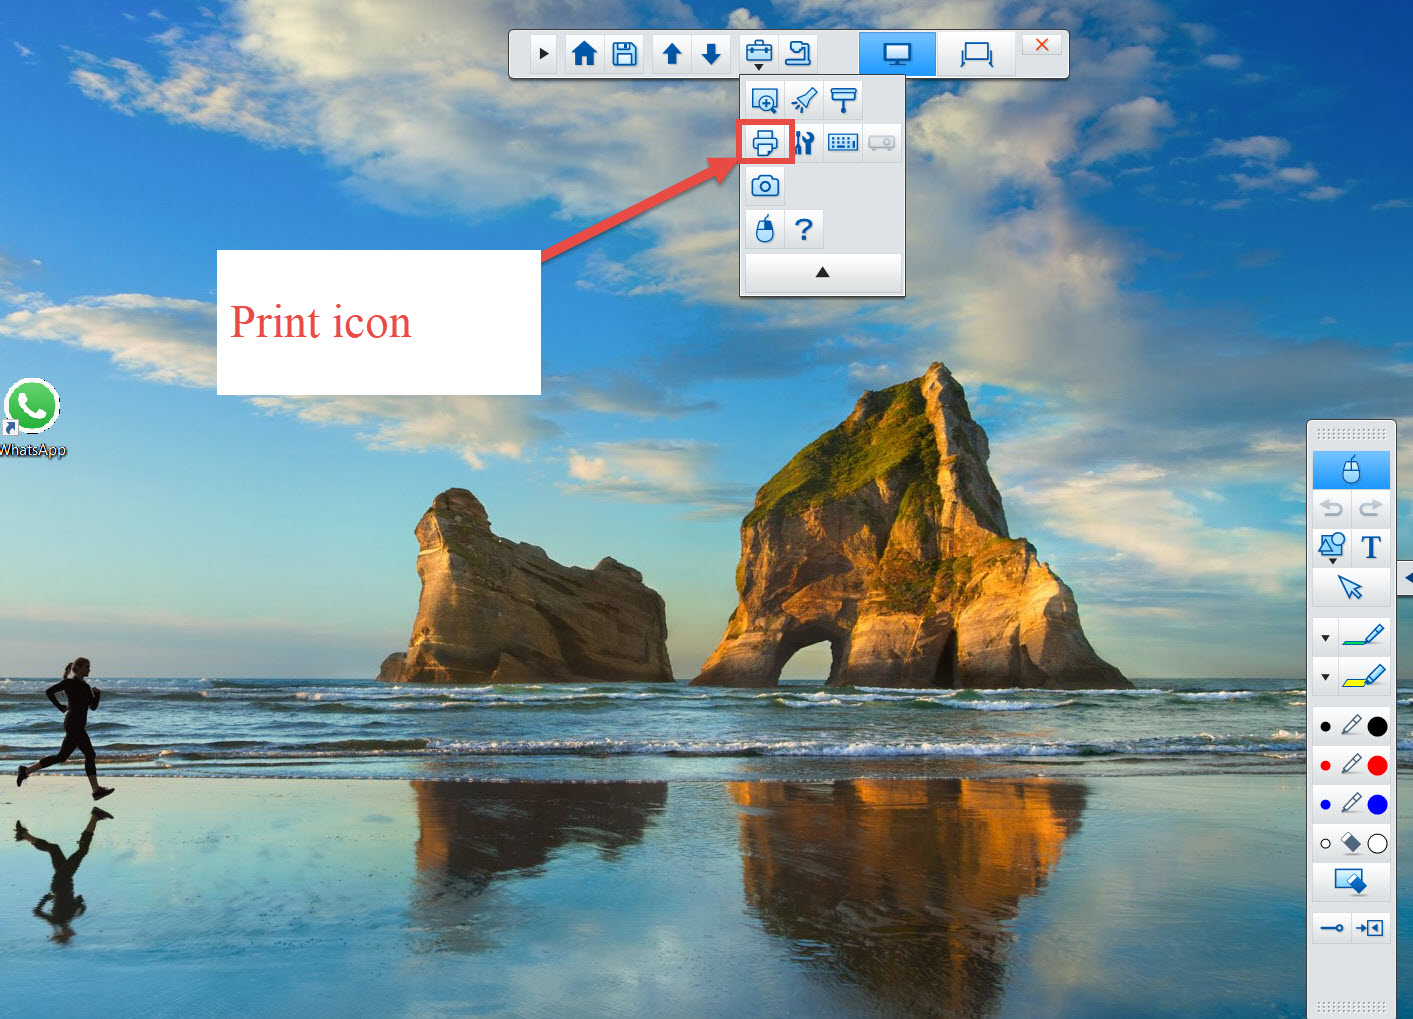 Select the print icon